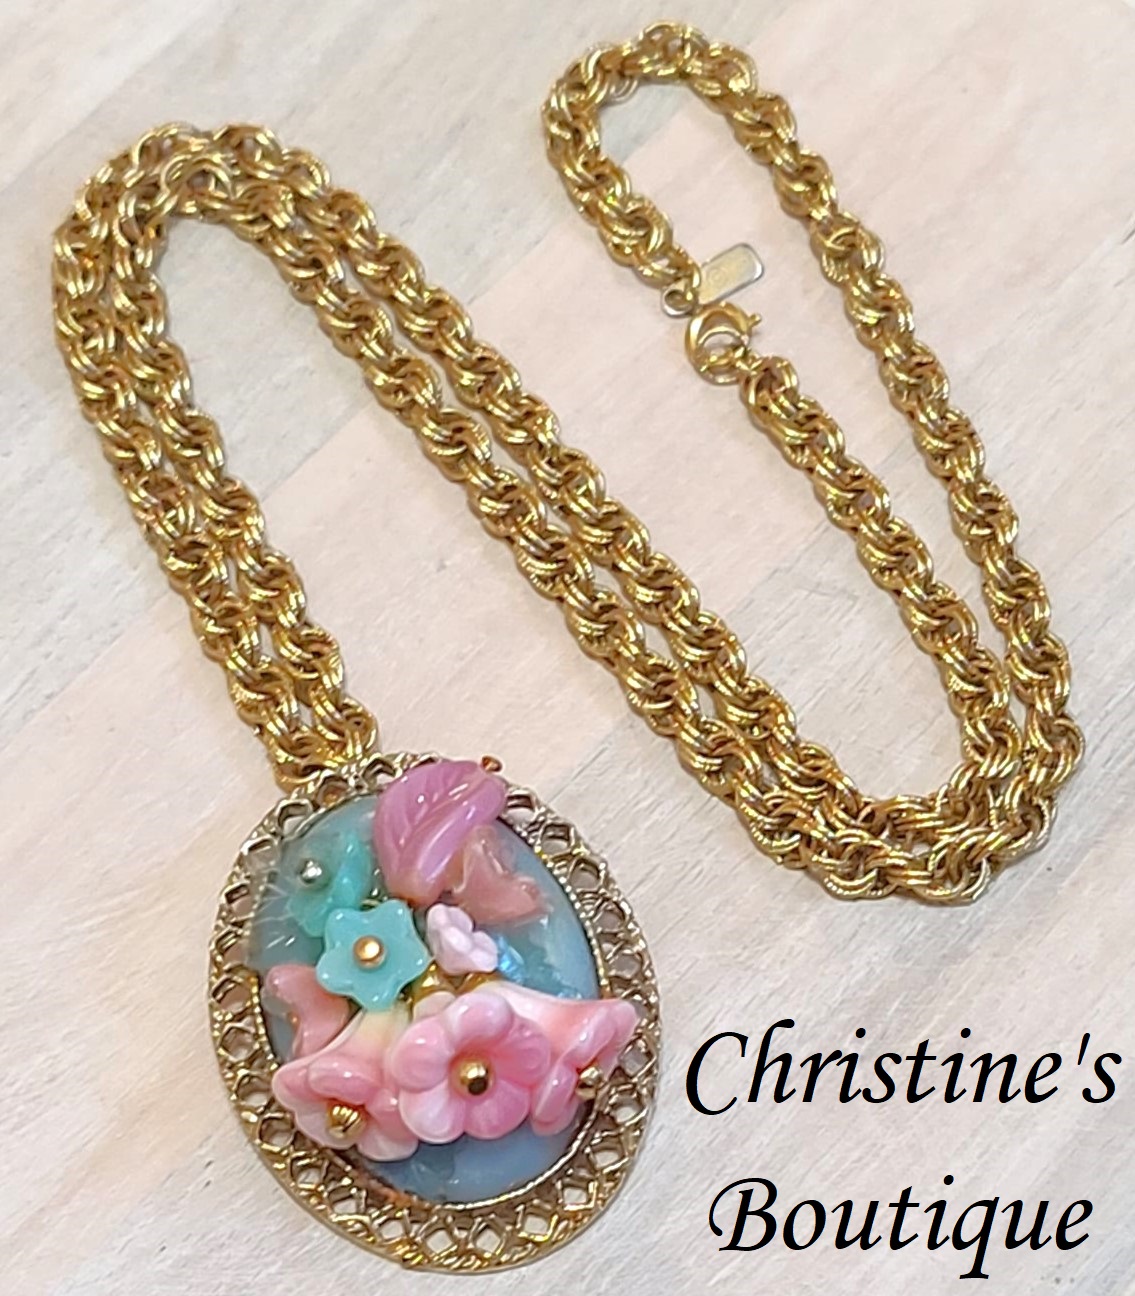 Designer Monet necklace, glass floral 3d pendant on thick goldtone weave chain, vintage statement necklace